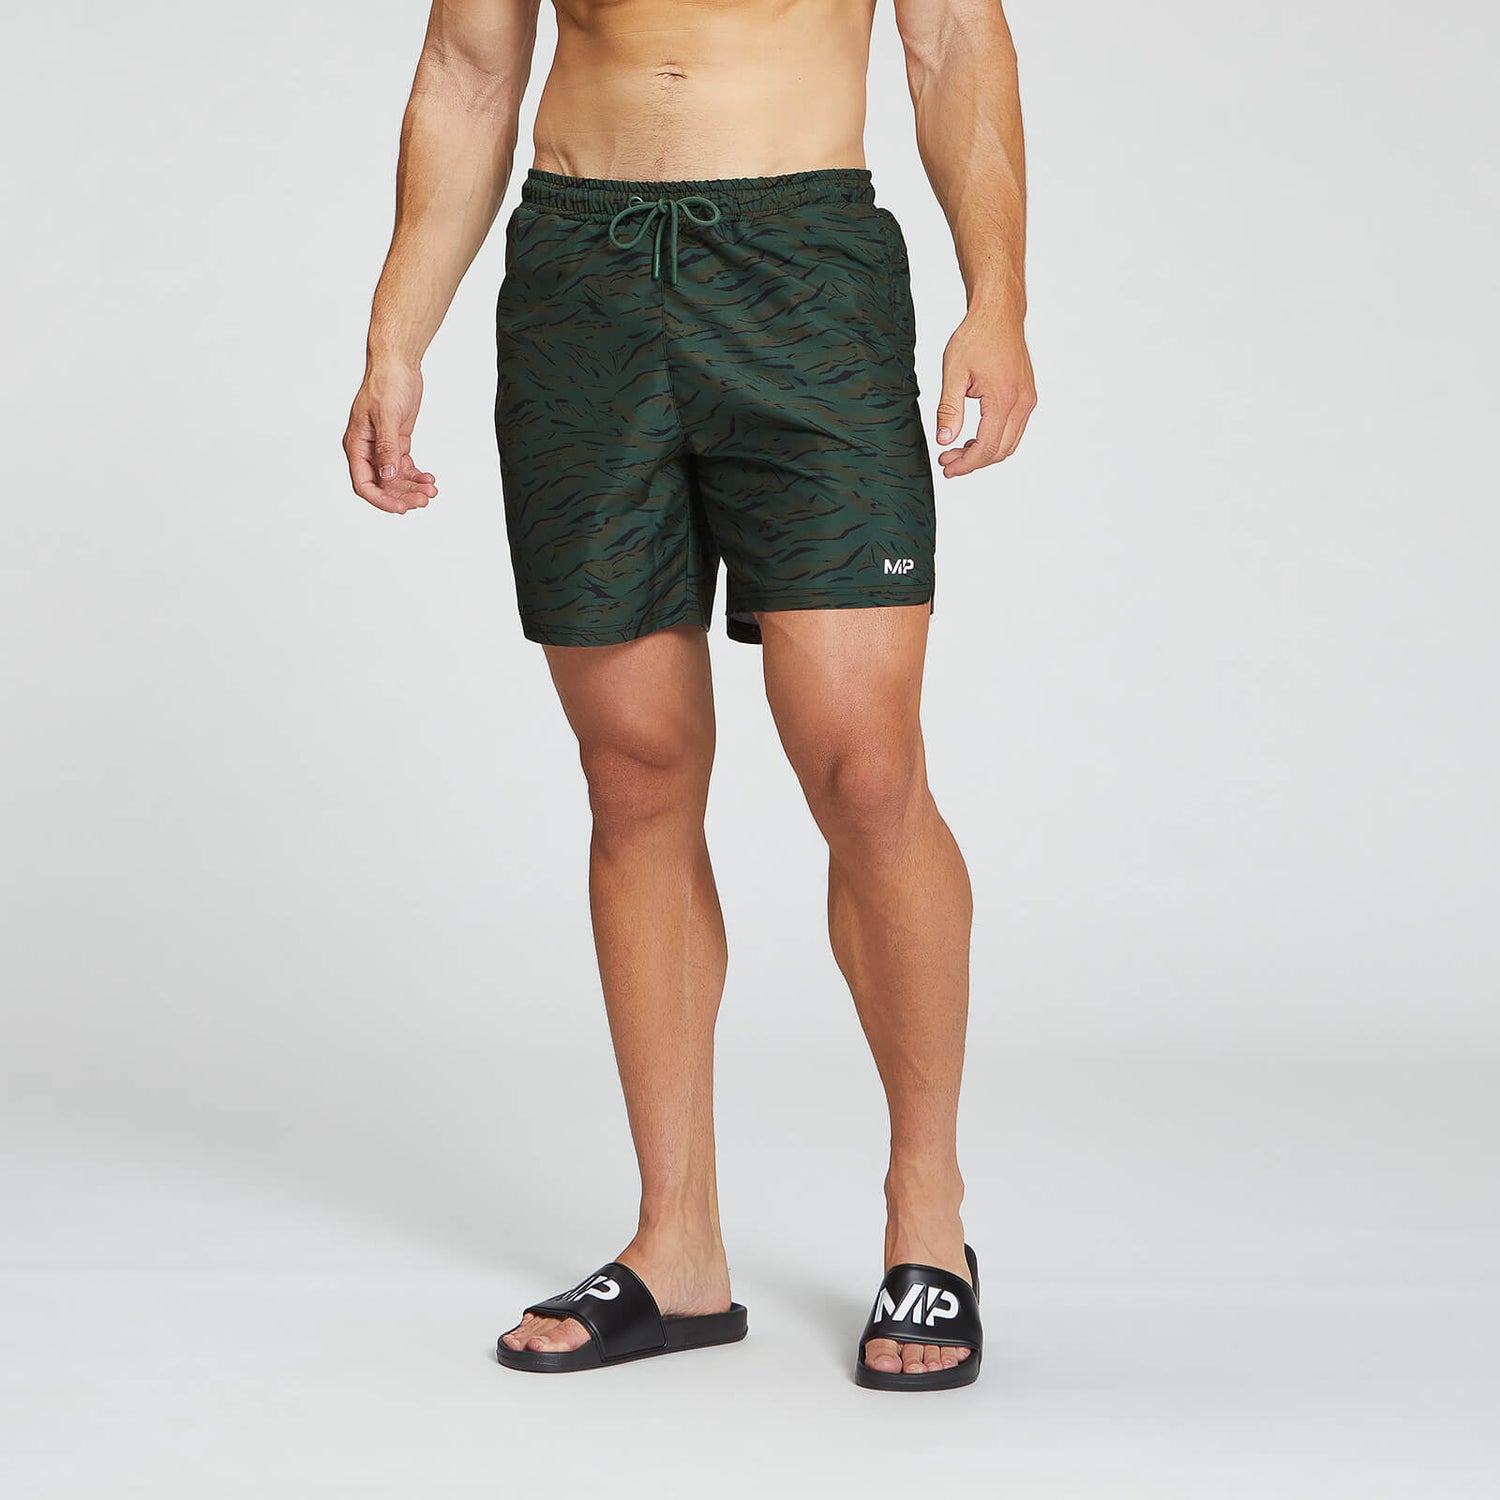 Miesten MP Pacific Printed Swim Shorts – Vihreä